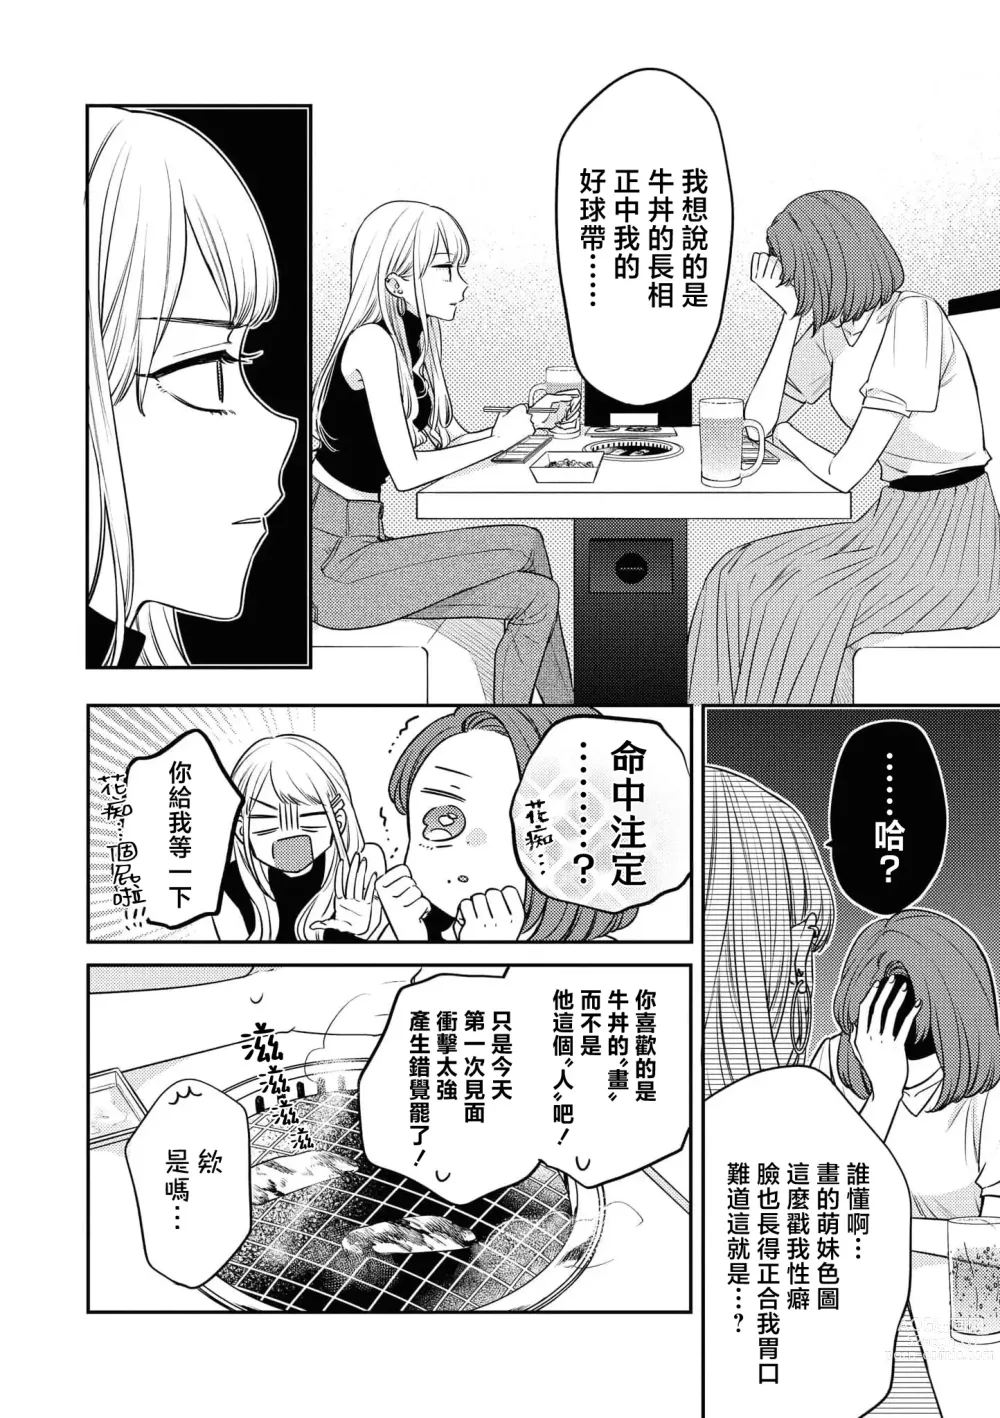 Page 5 of manga 等不及全熟（doujinonna yuri ansoroji-）